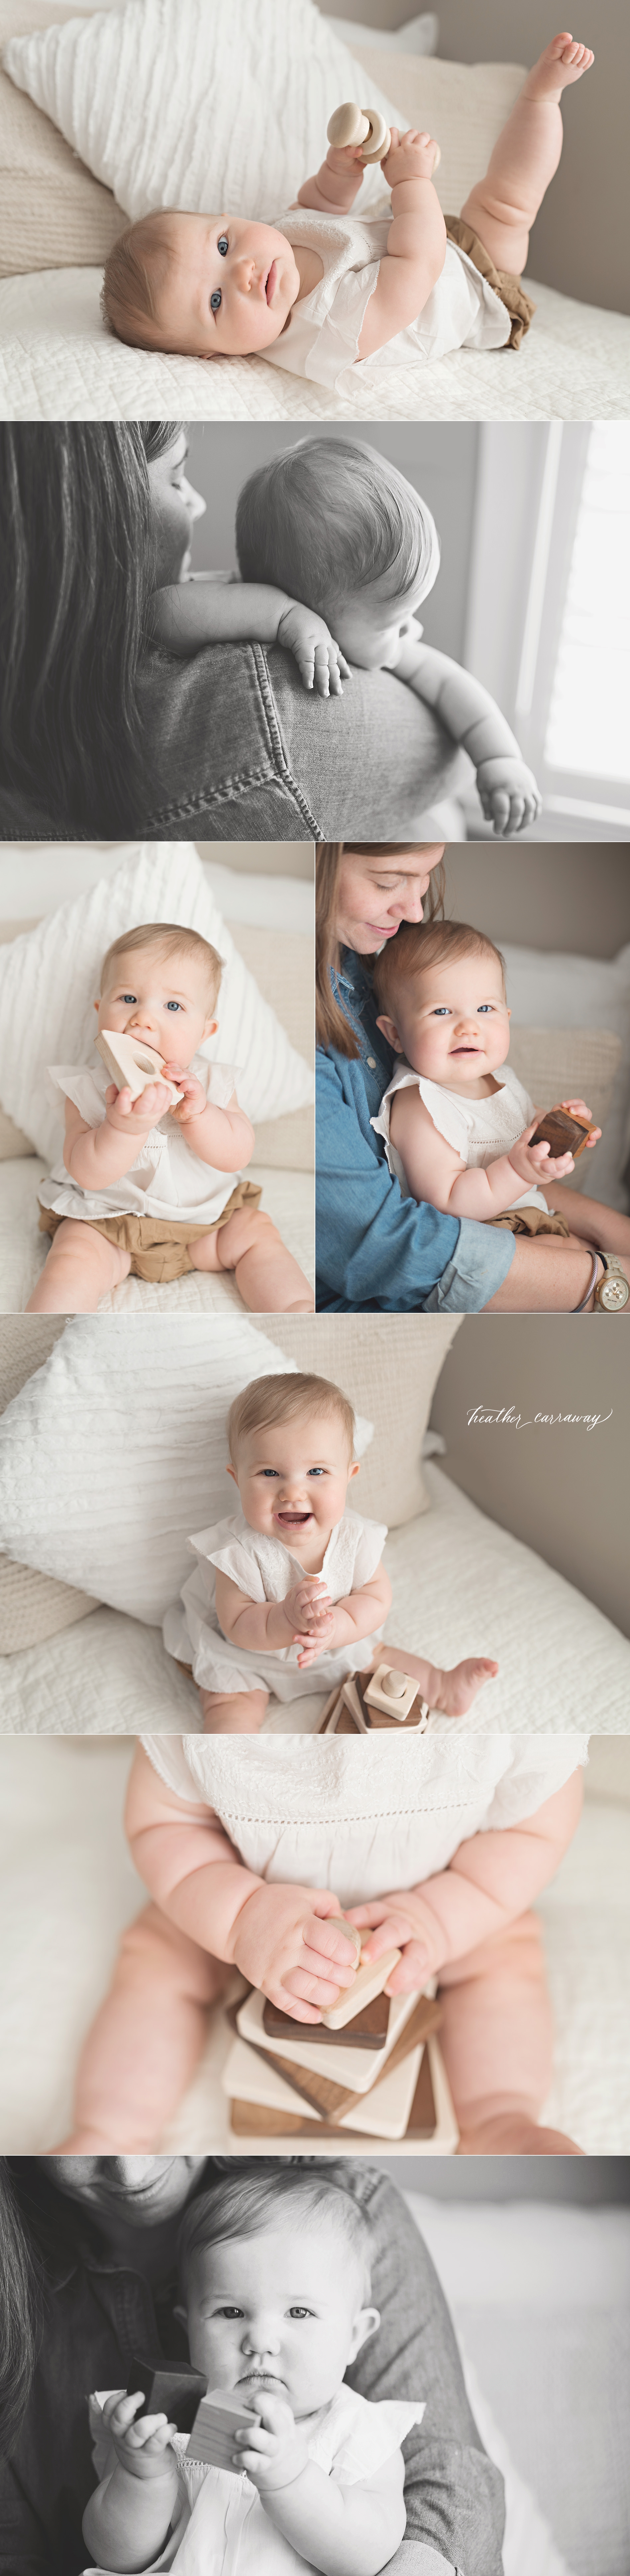 8 month old baby | baby milestone session | atlanta baby photographer